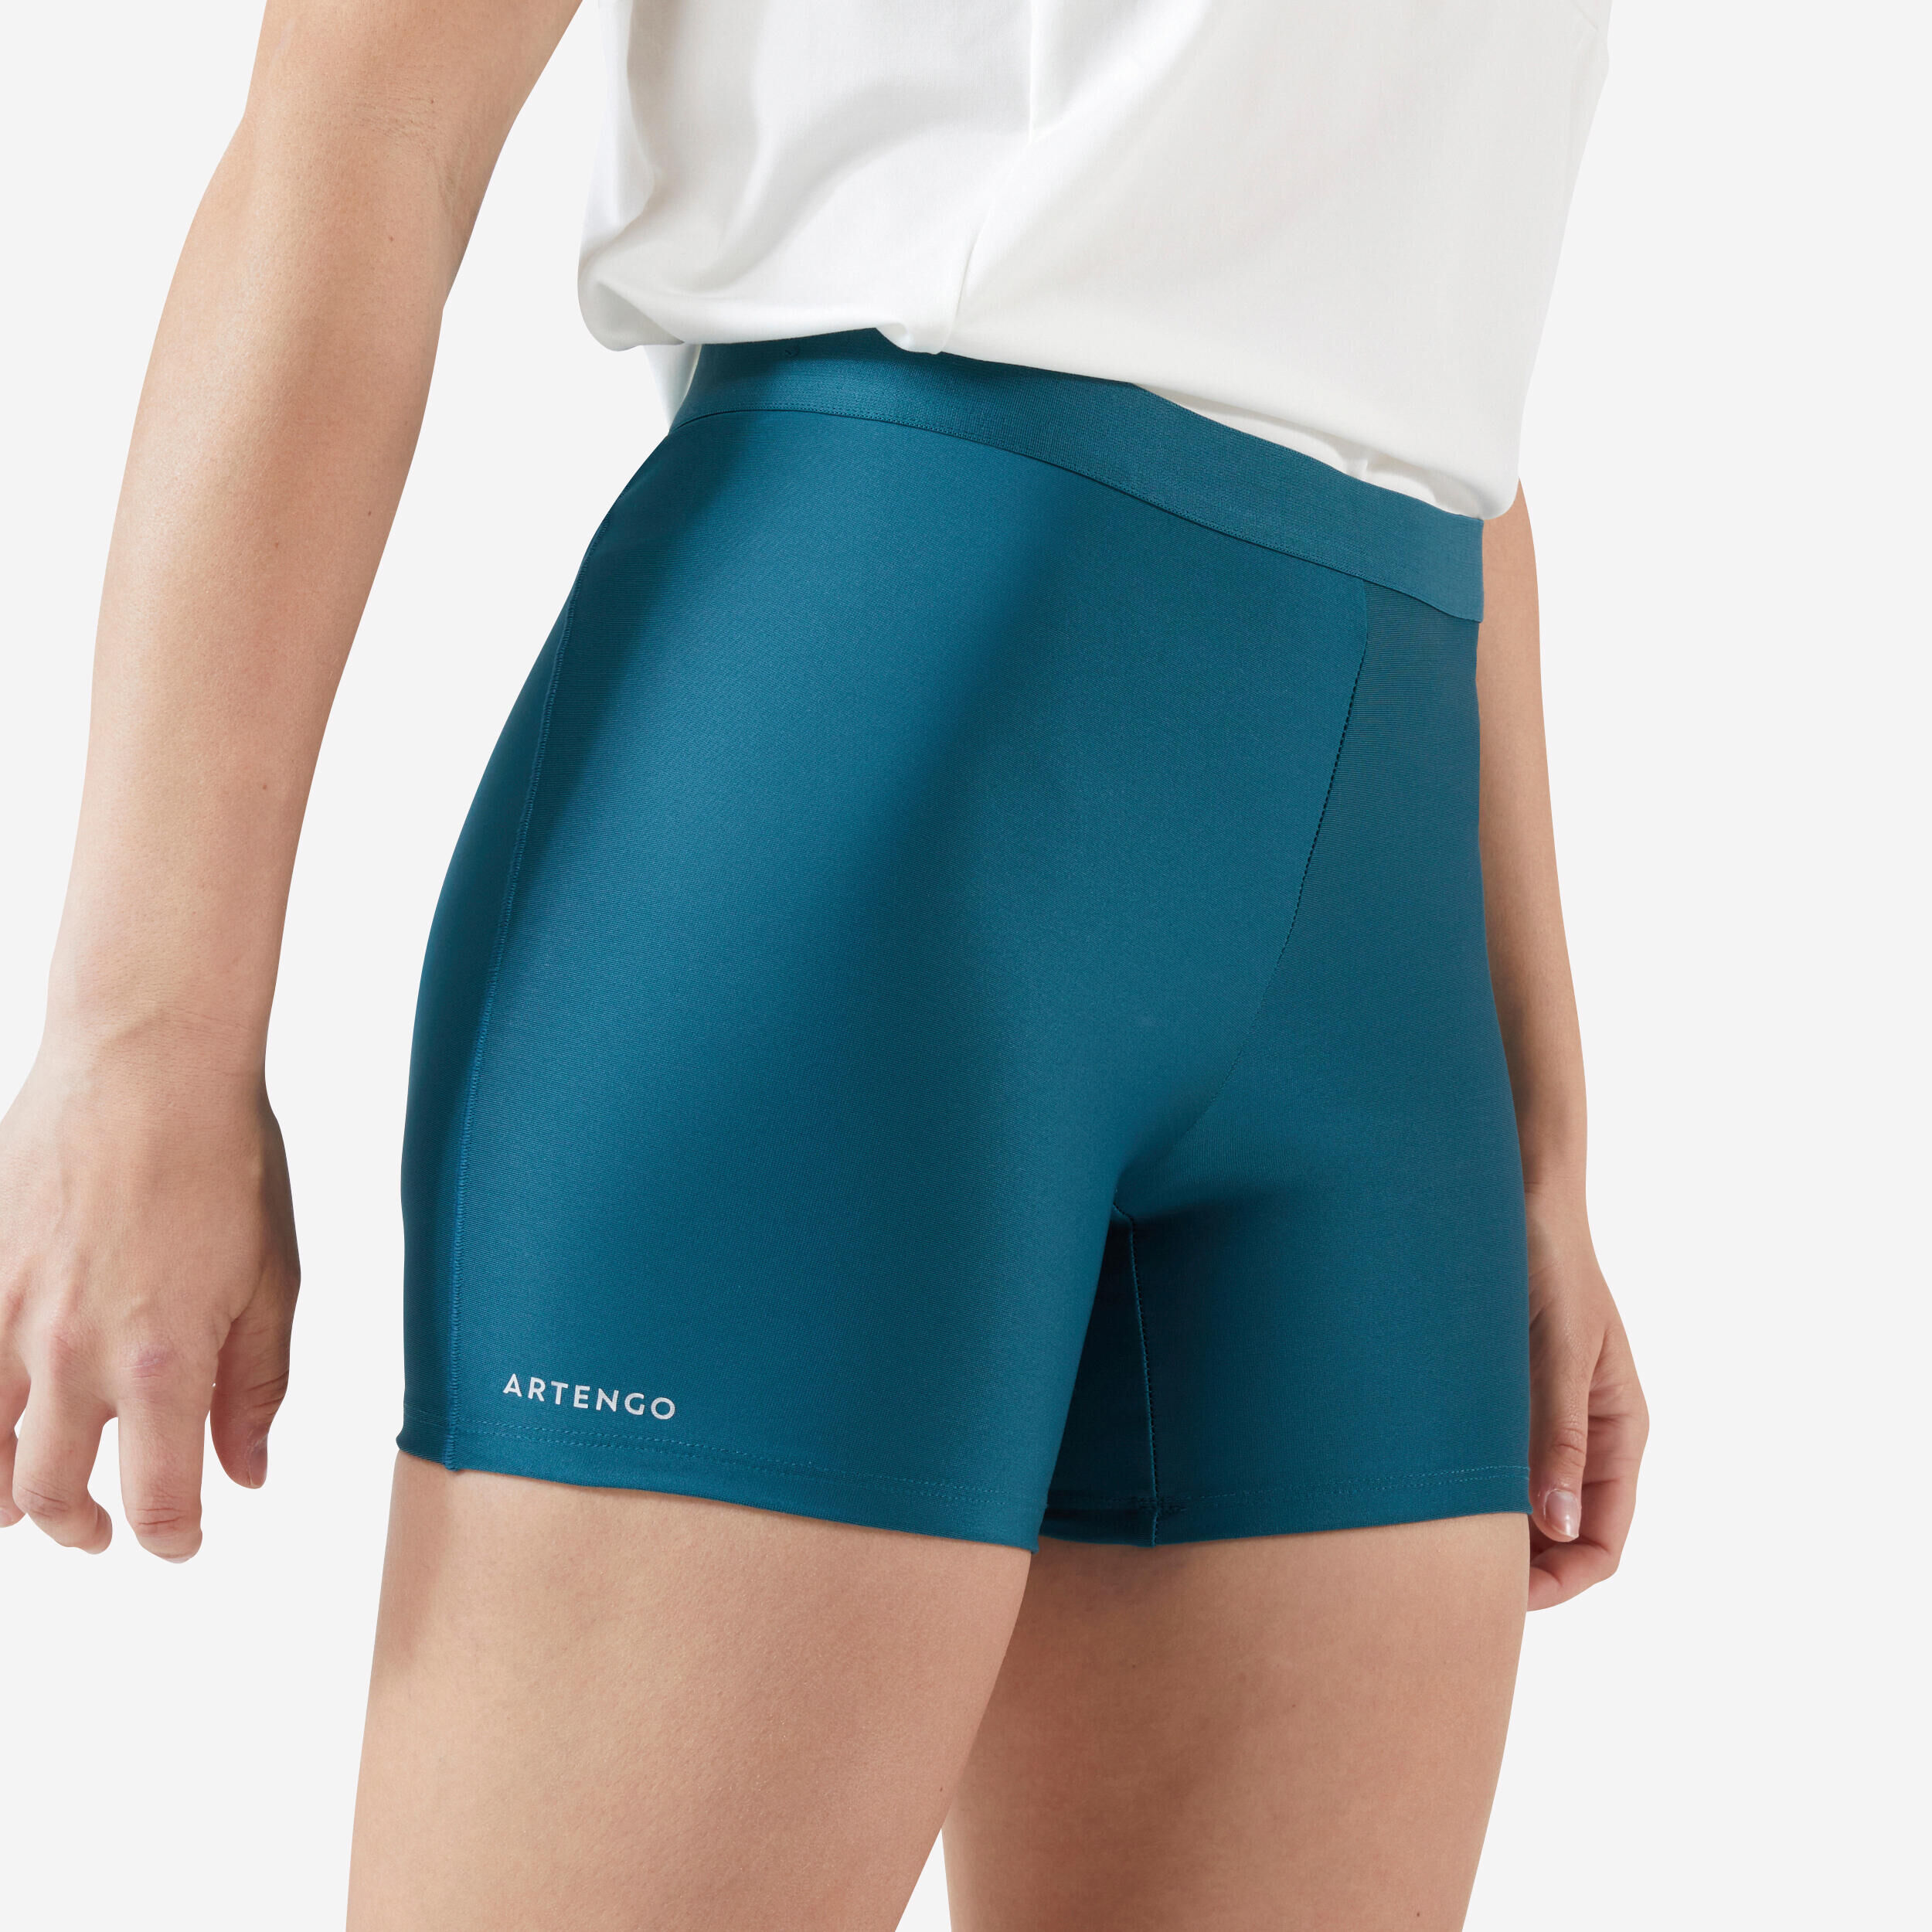 ARTENGO Women's Tennis Quick-Dry Shorts Dry 900 - Turquoise